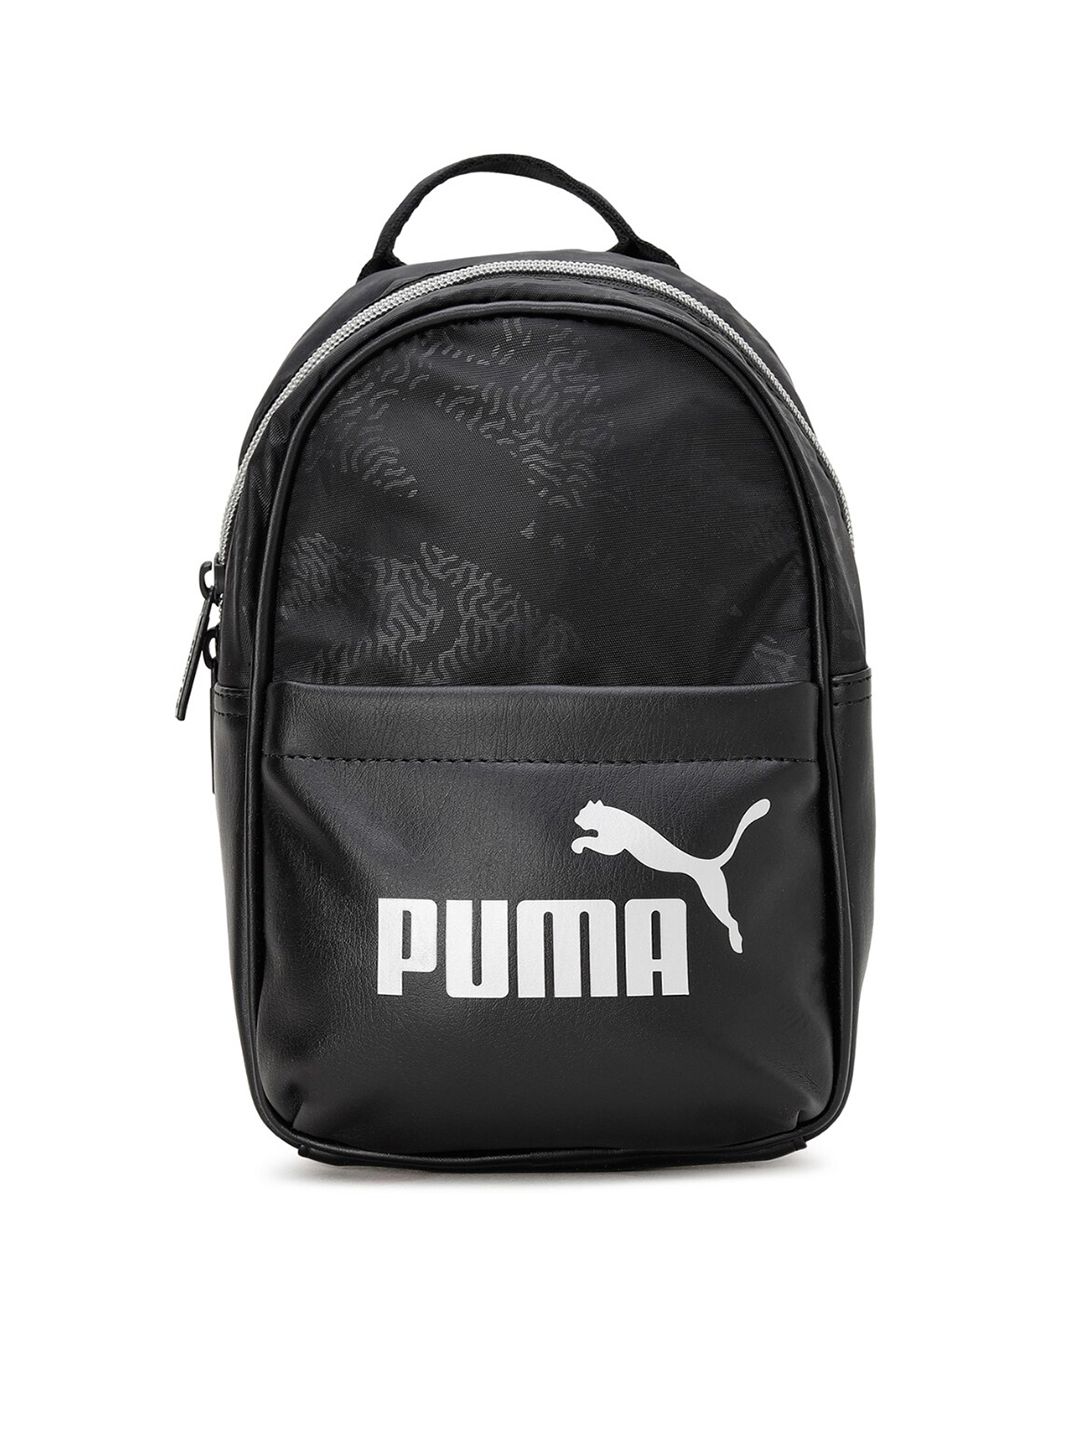 Puma Women Black Brand Logo Backpack Price in India